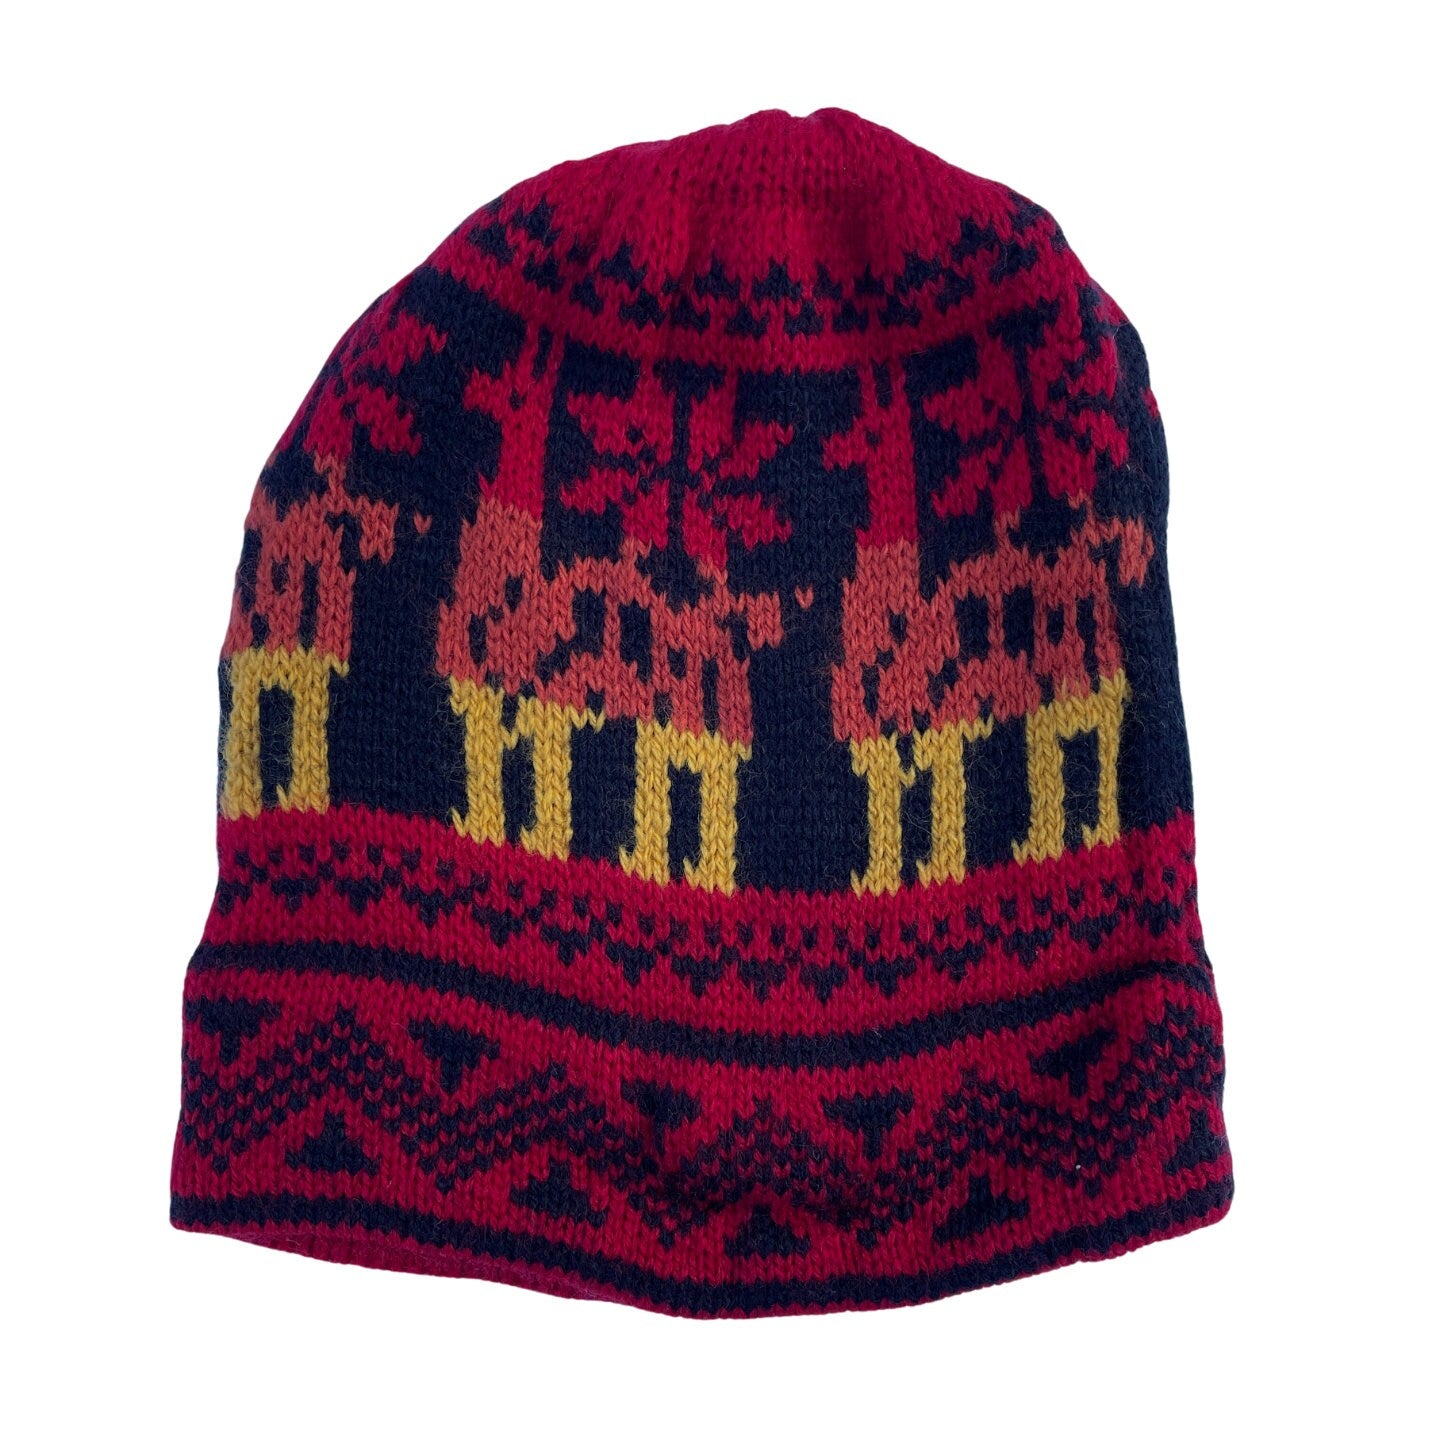 Knitted Alpaca Beanie Hat | Llama Red Black